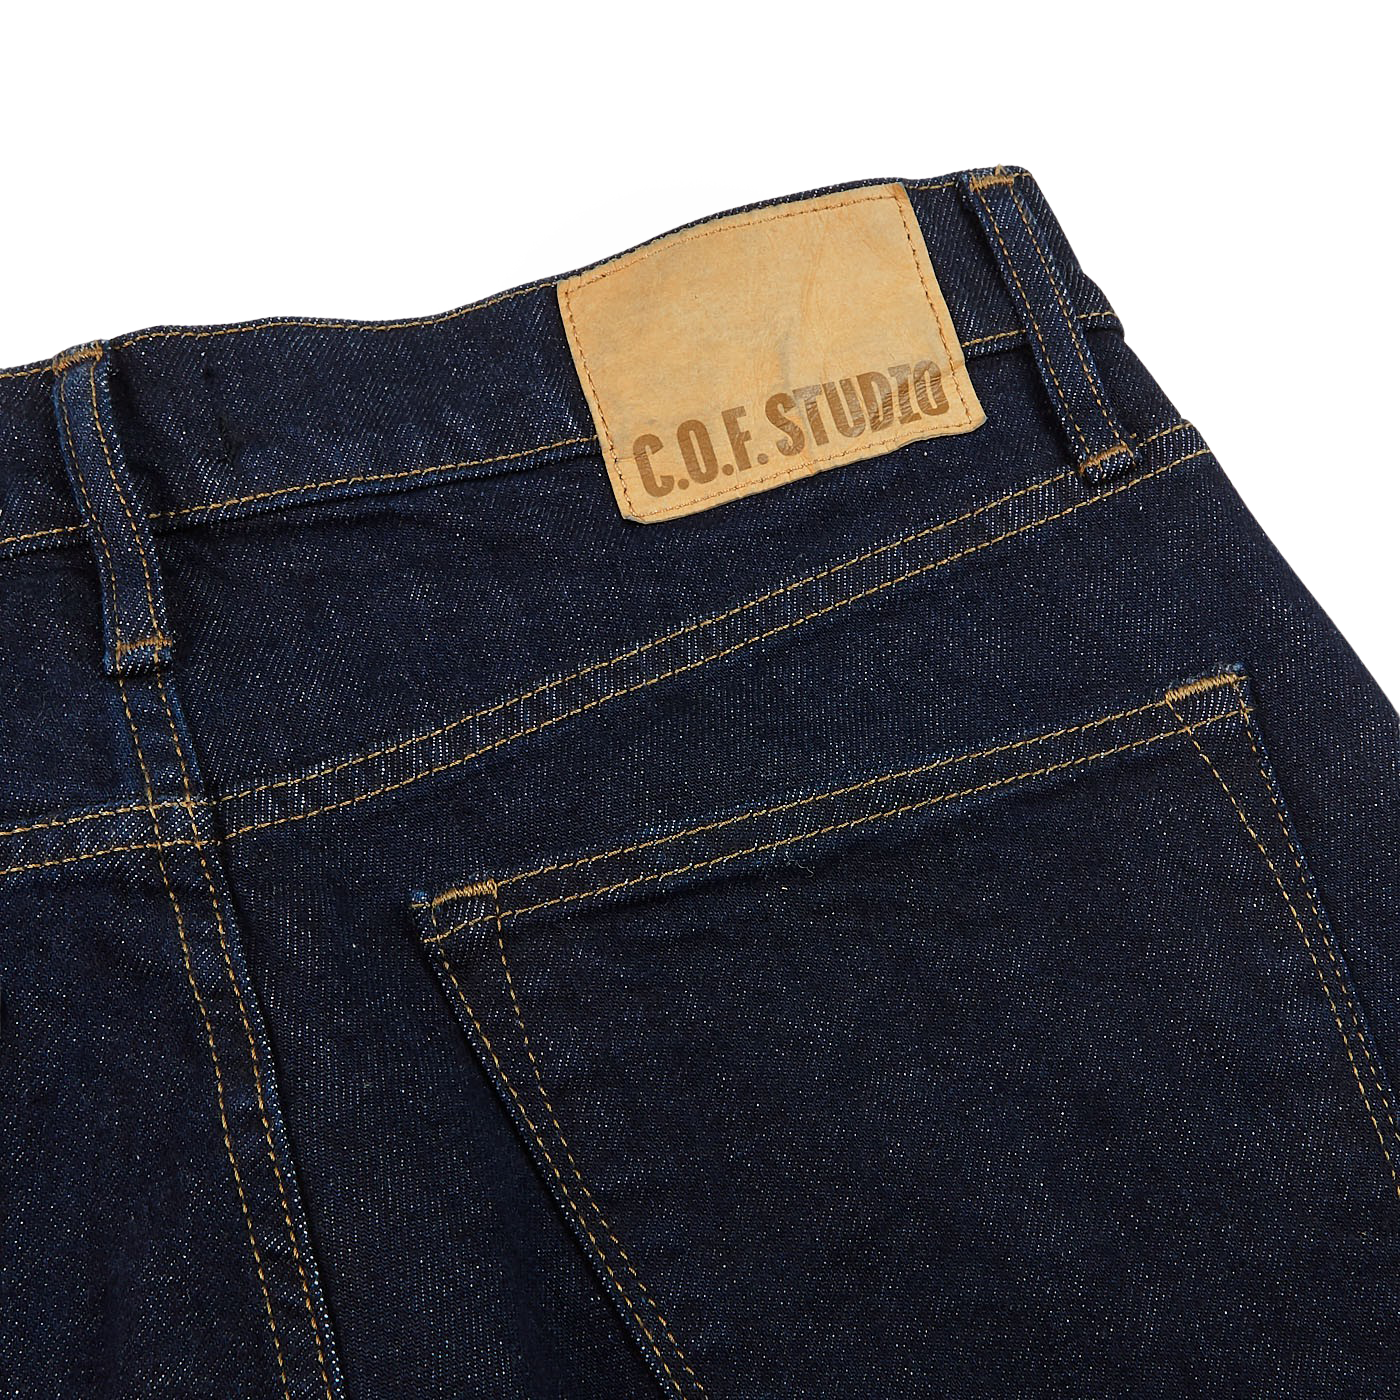 C.O.F Studio Blue Rinsed Organic Candiani Cotton M7 Jeans Pocket